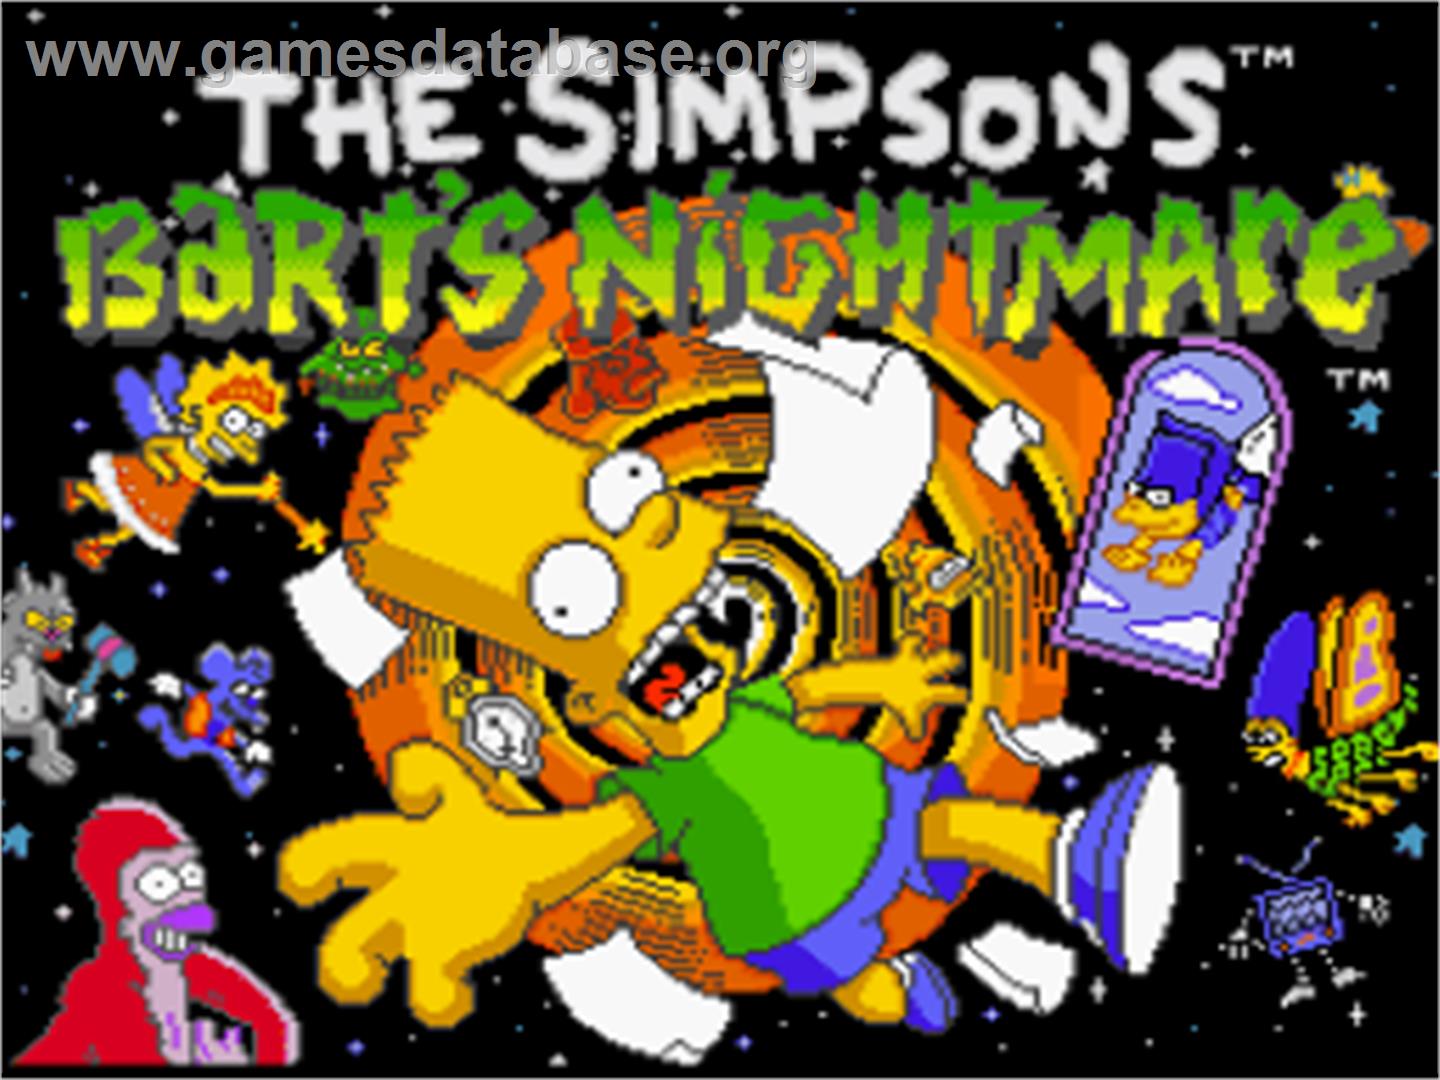 The Simpsons: Bart's Nightmare - Nintendo SNES - Artwork - Title Screen